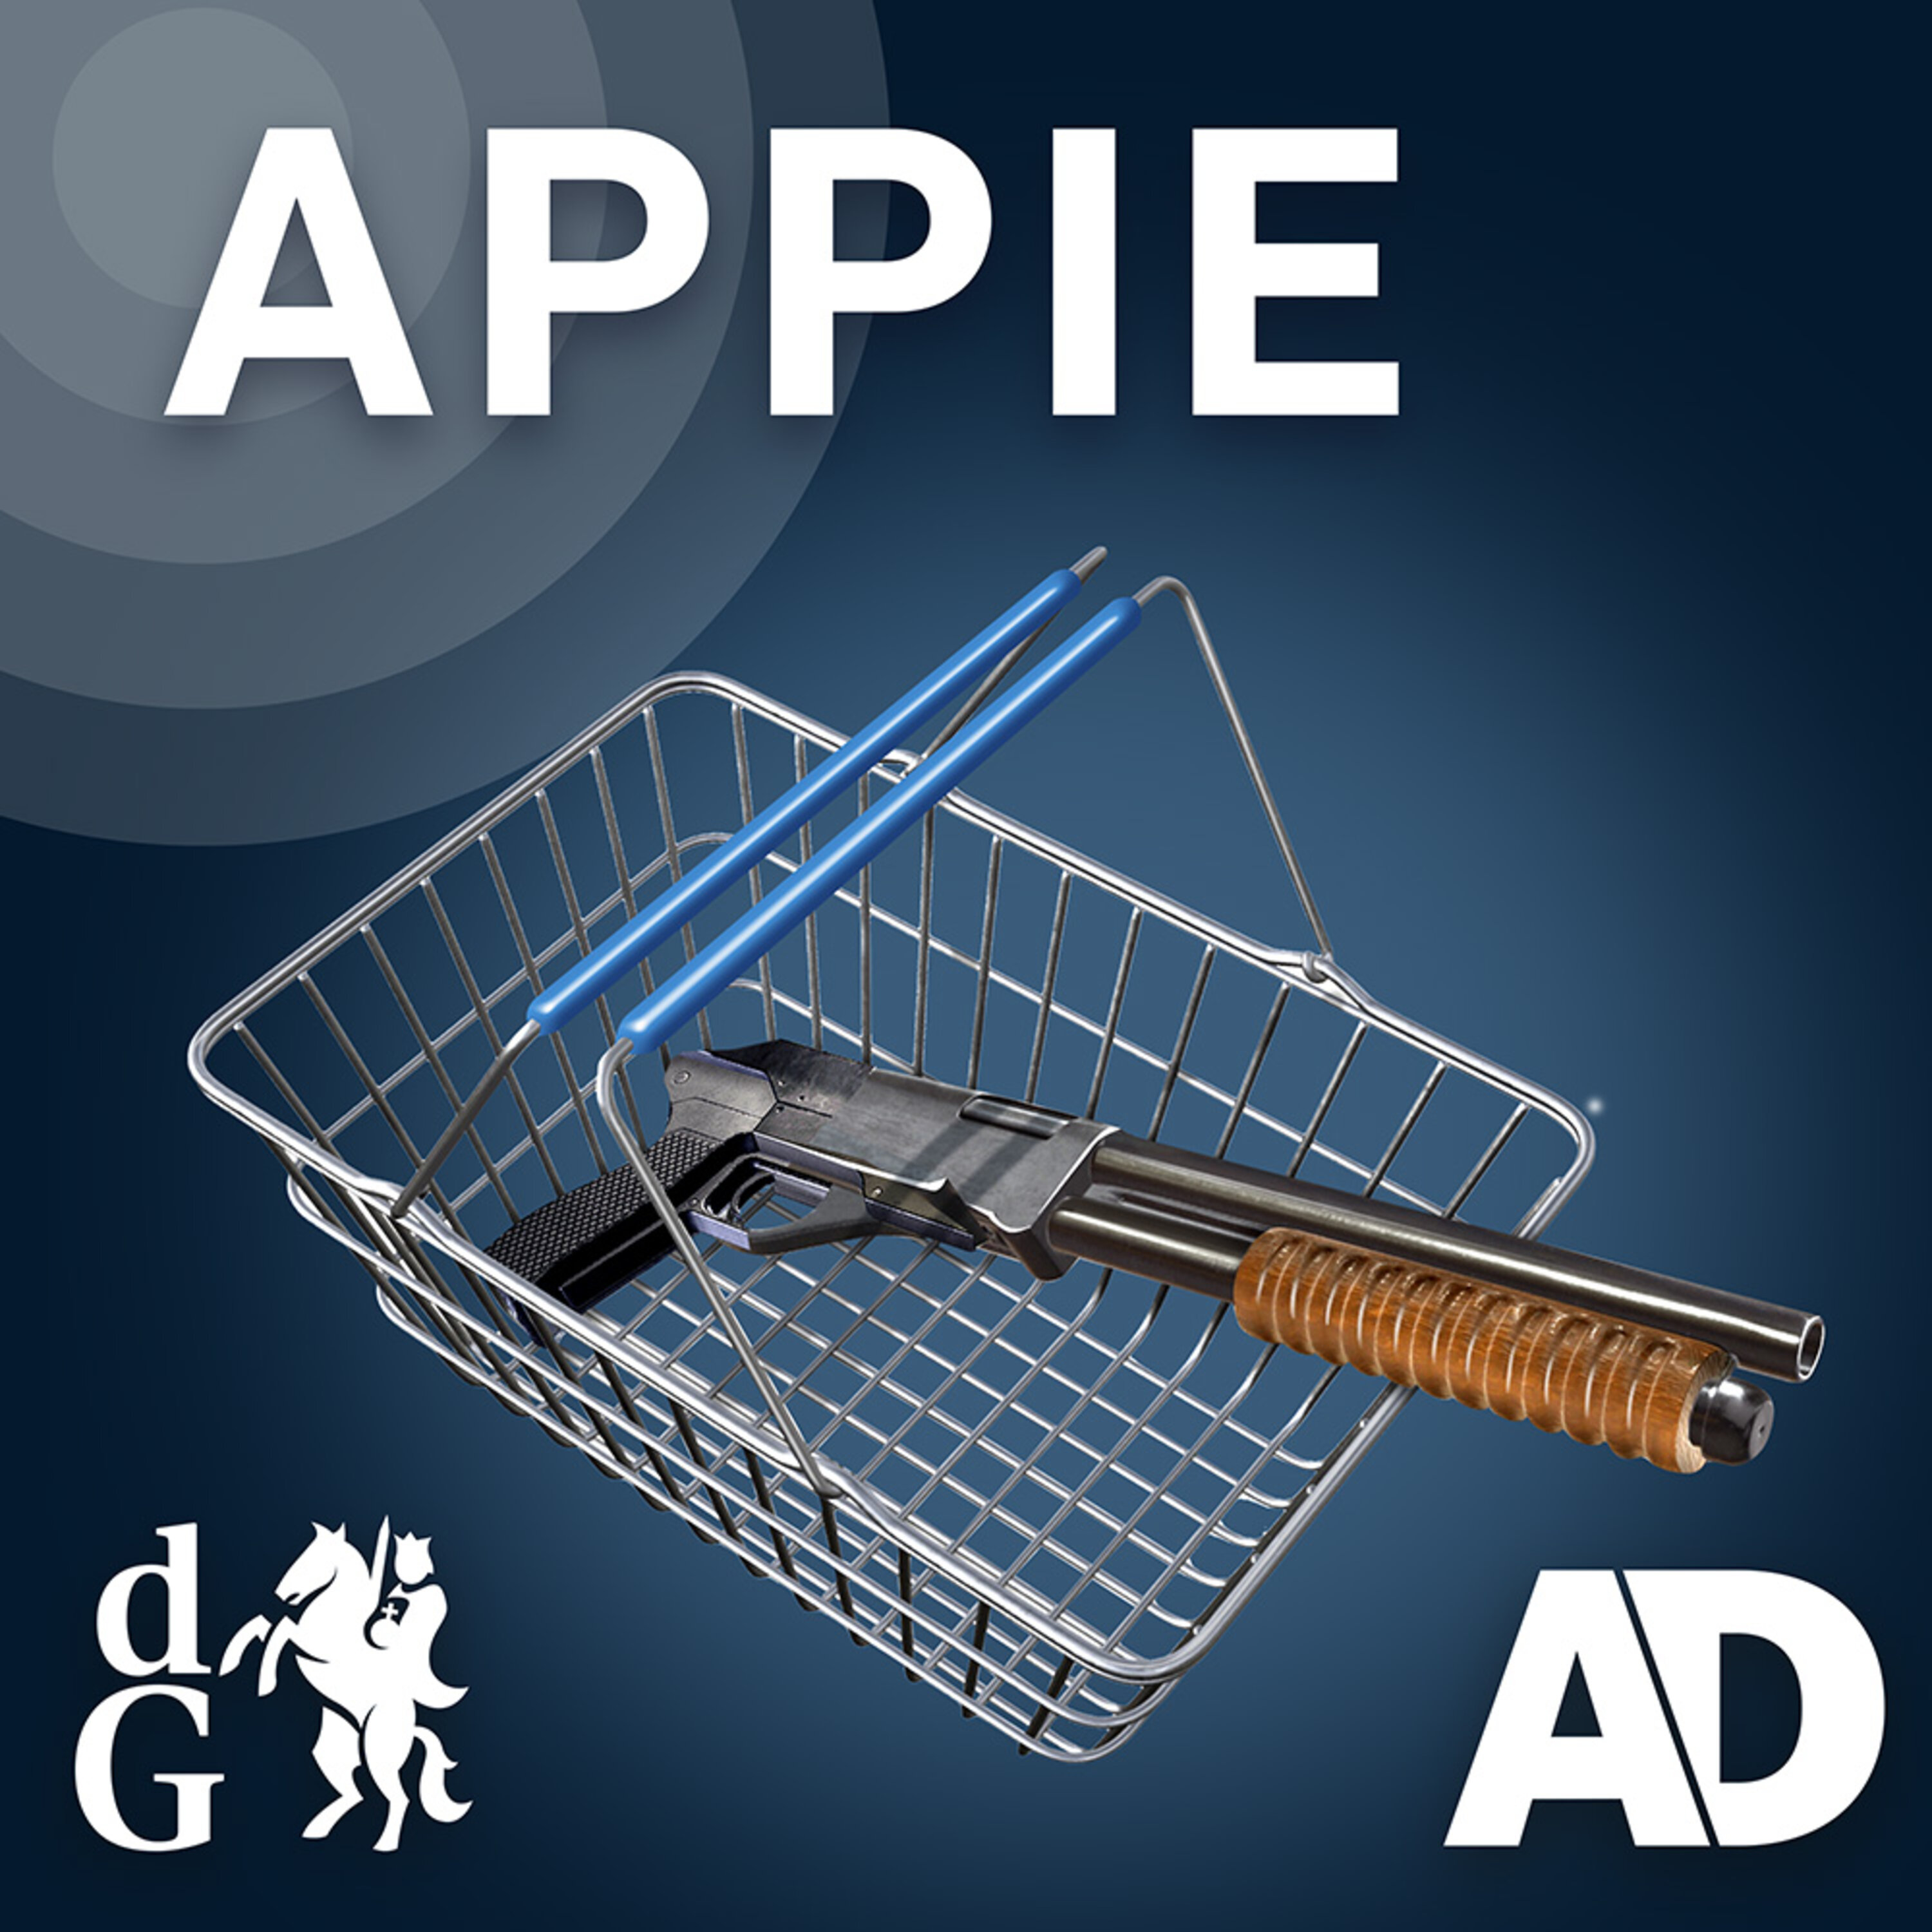 Appie logo